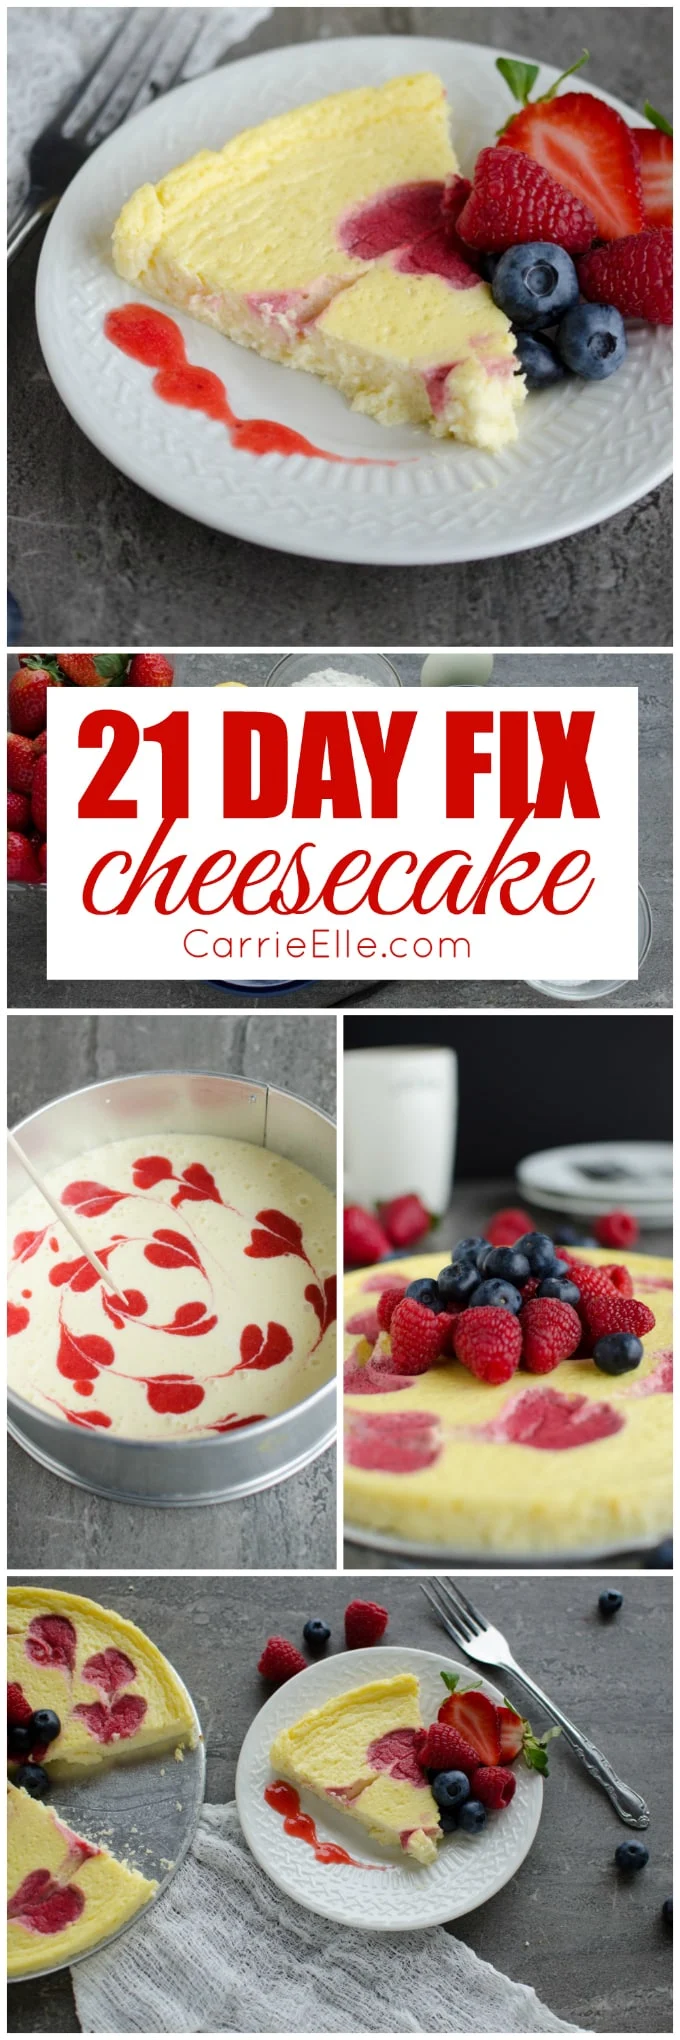 21 Day Fix Cheesecake Recipe